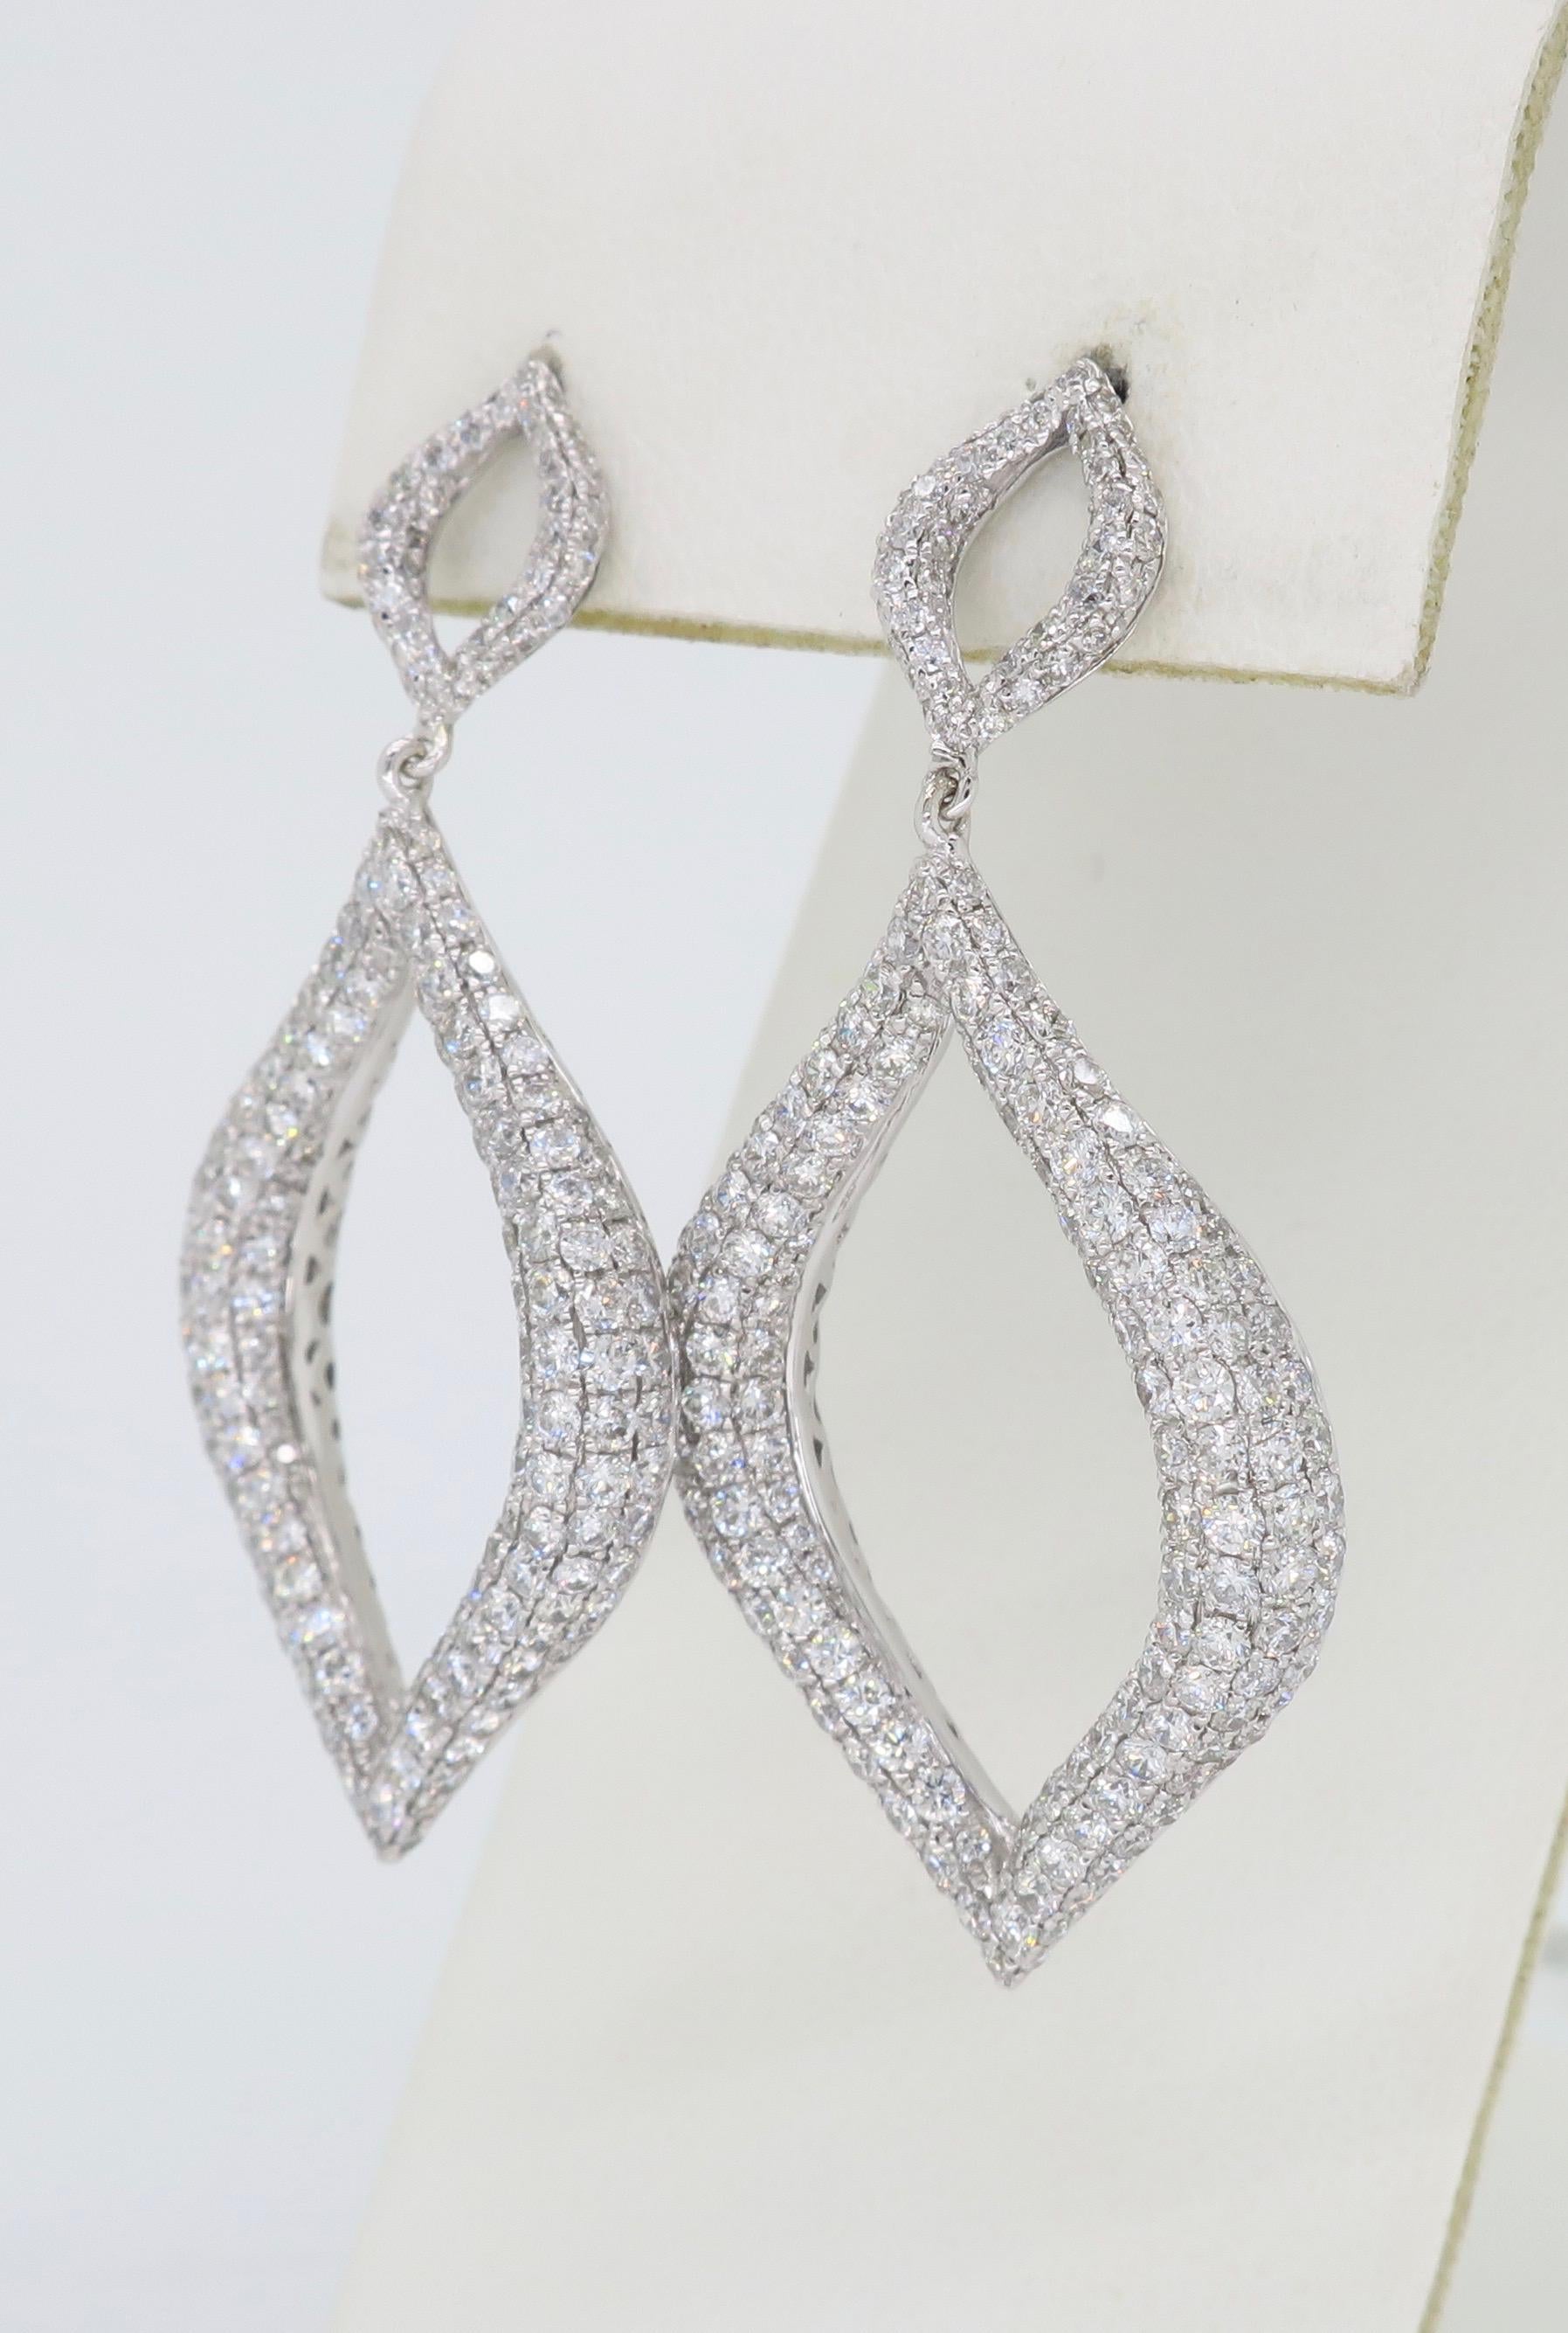 Pavé Set Diamond Drop Earrings in 18 Karat White Gold 1